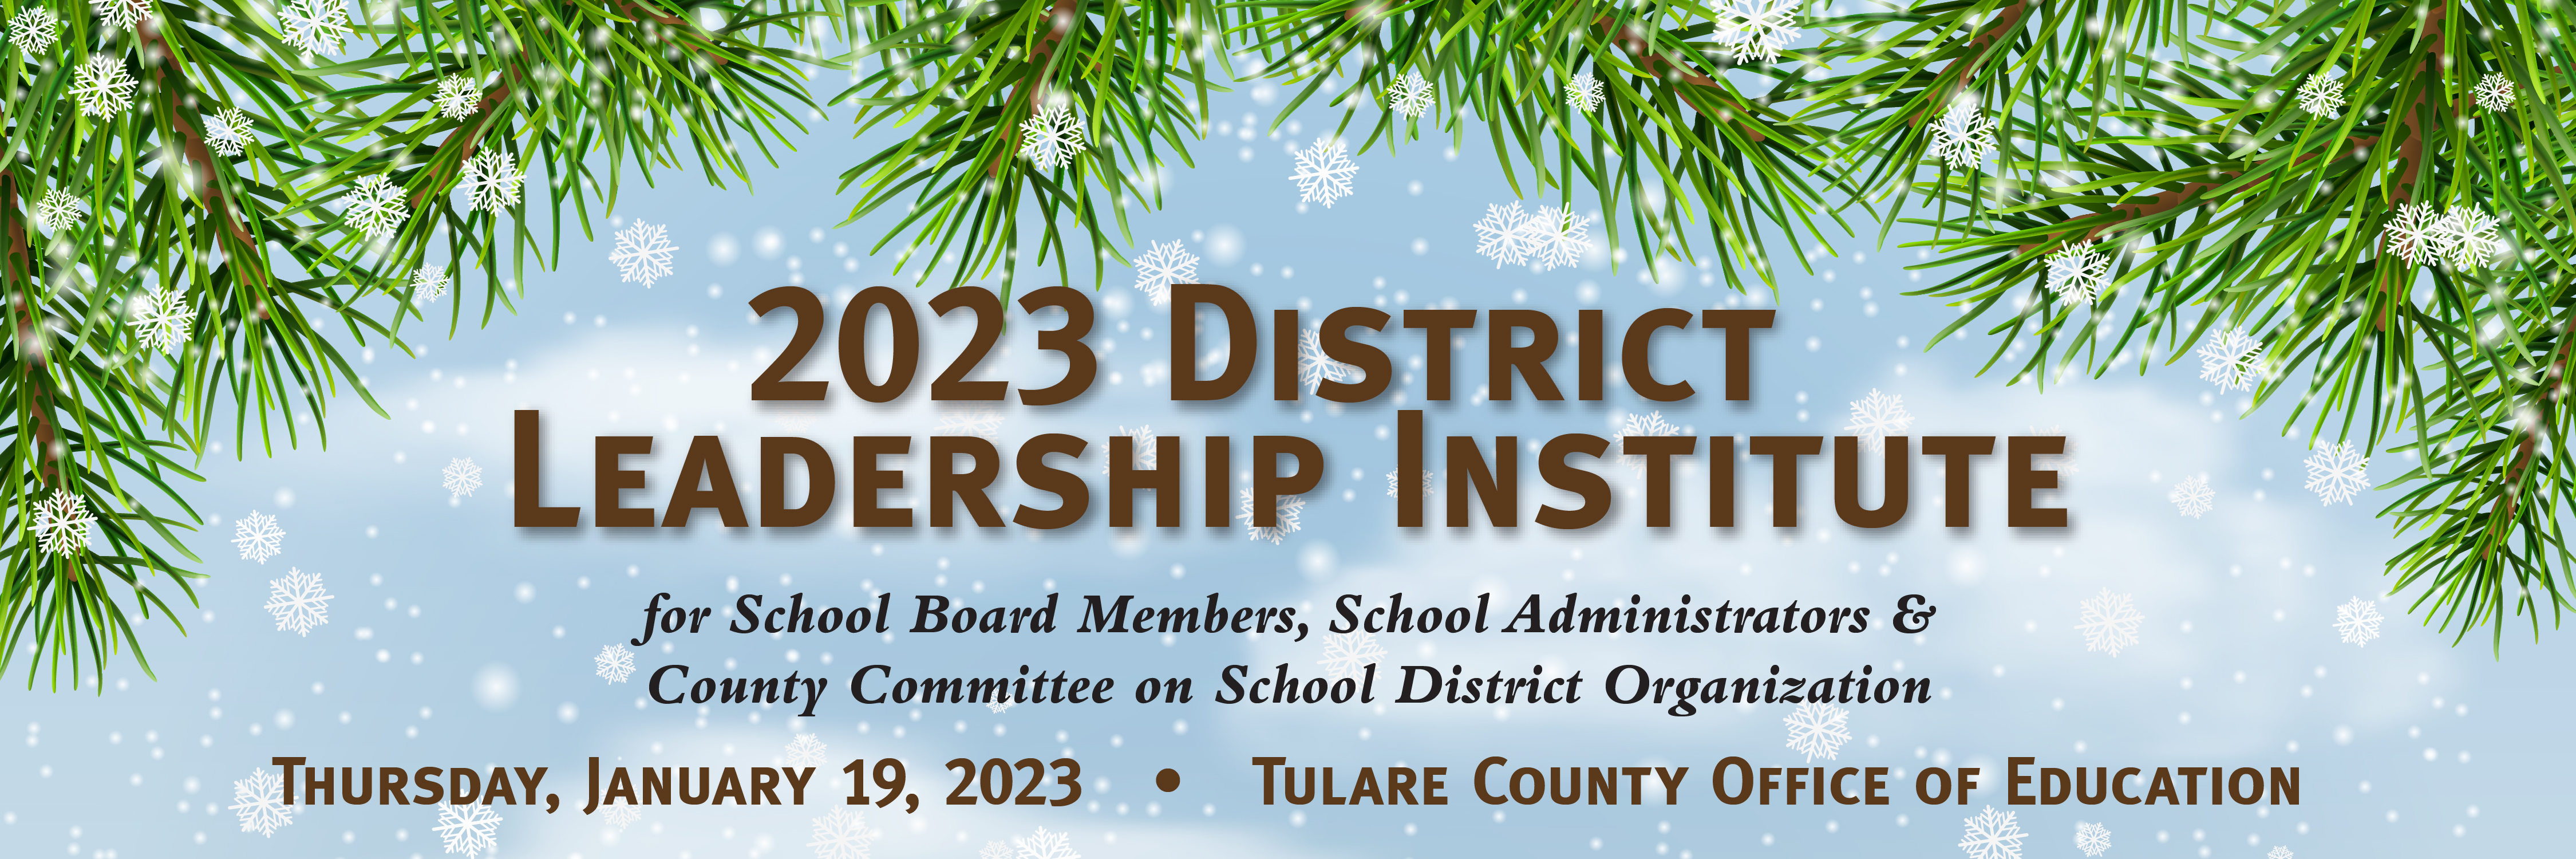 District Leadership Institute January 19, 2023